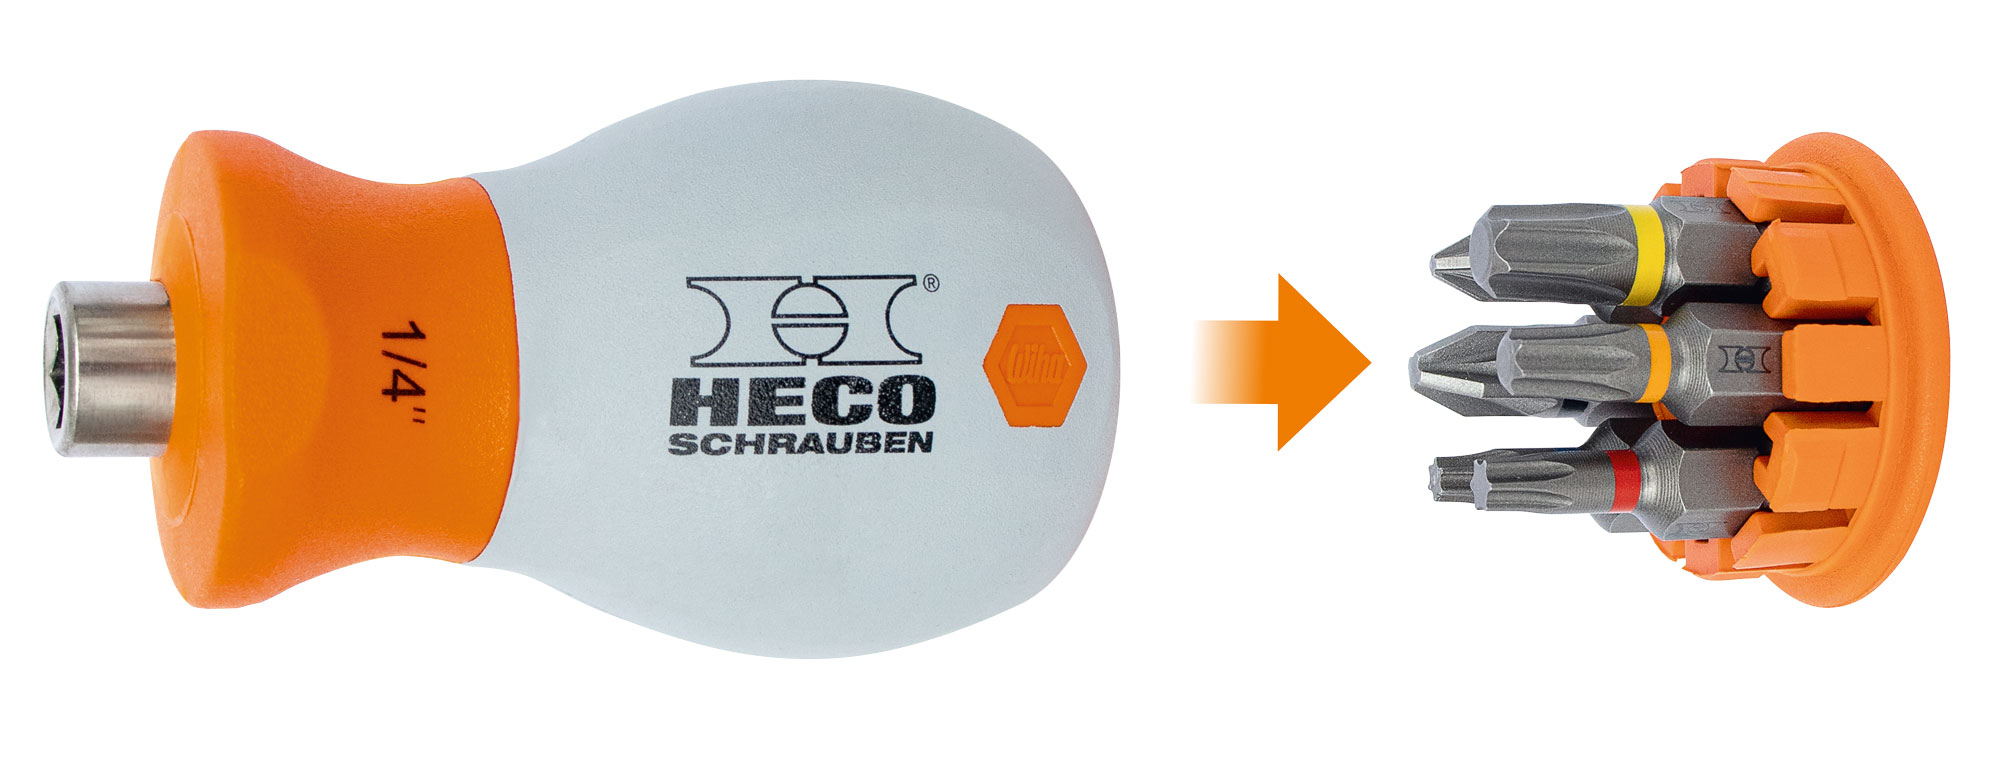 HECO-Stubby mini screwdriver with 6-piece bit magazine in handle